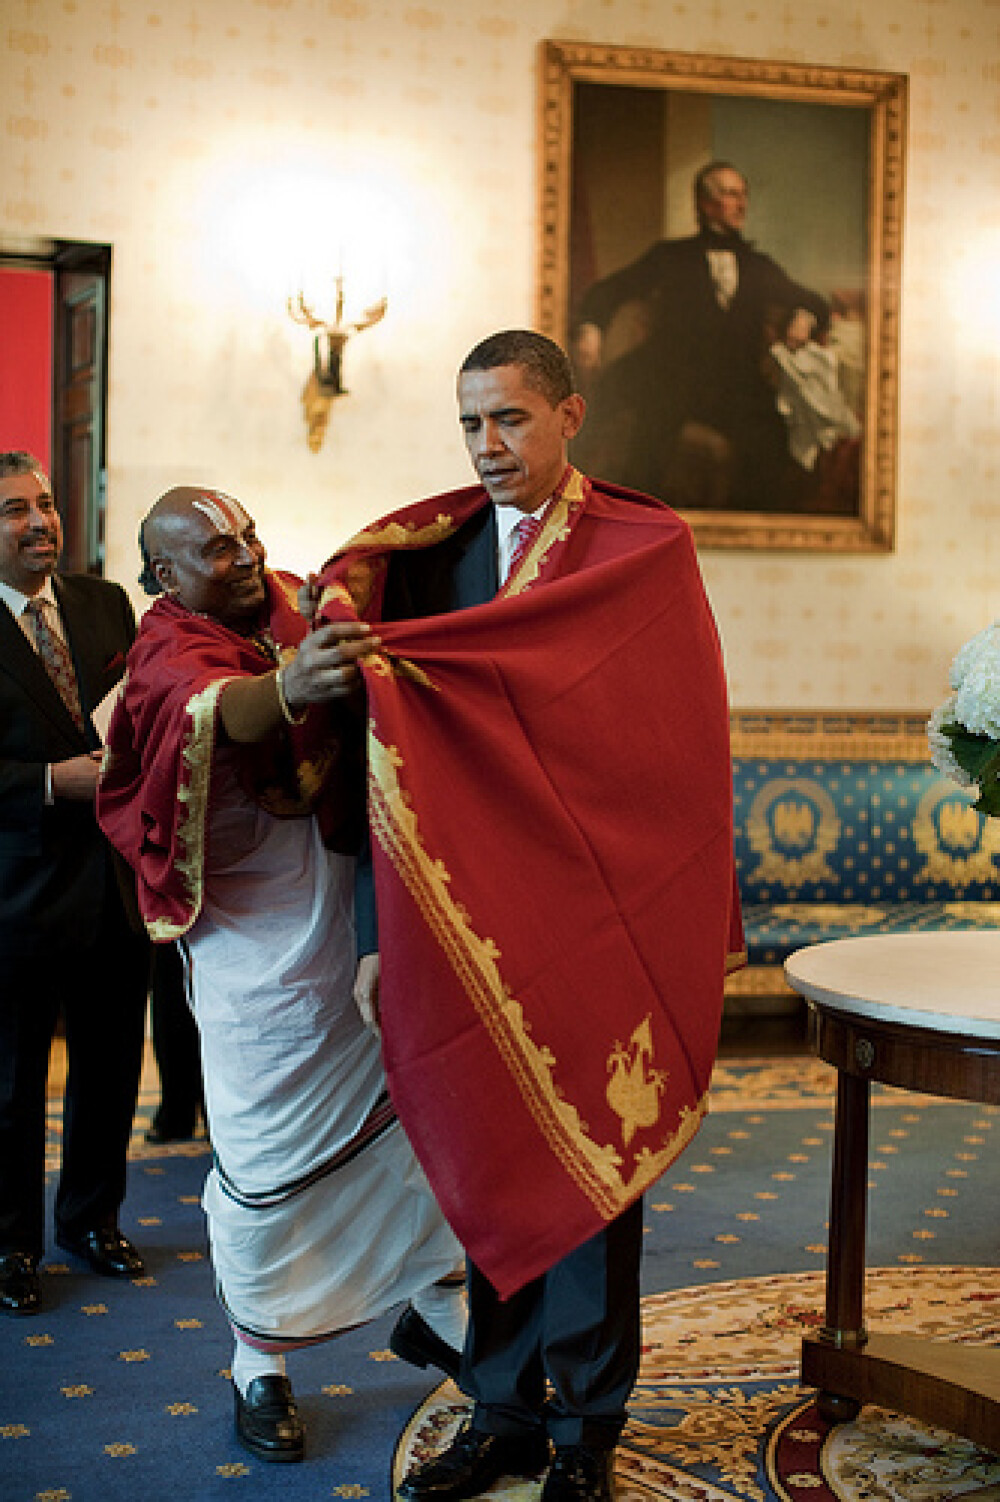 Familia Obama, la primul album foto publicat pe internet! GALERIE FOTO - Imaginea 4